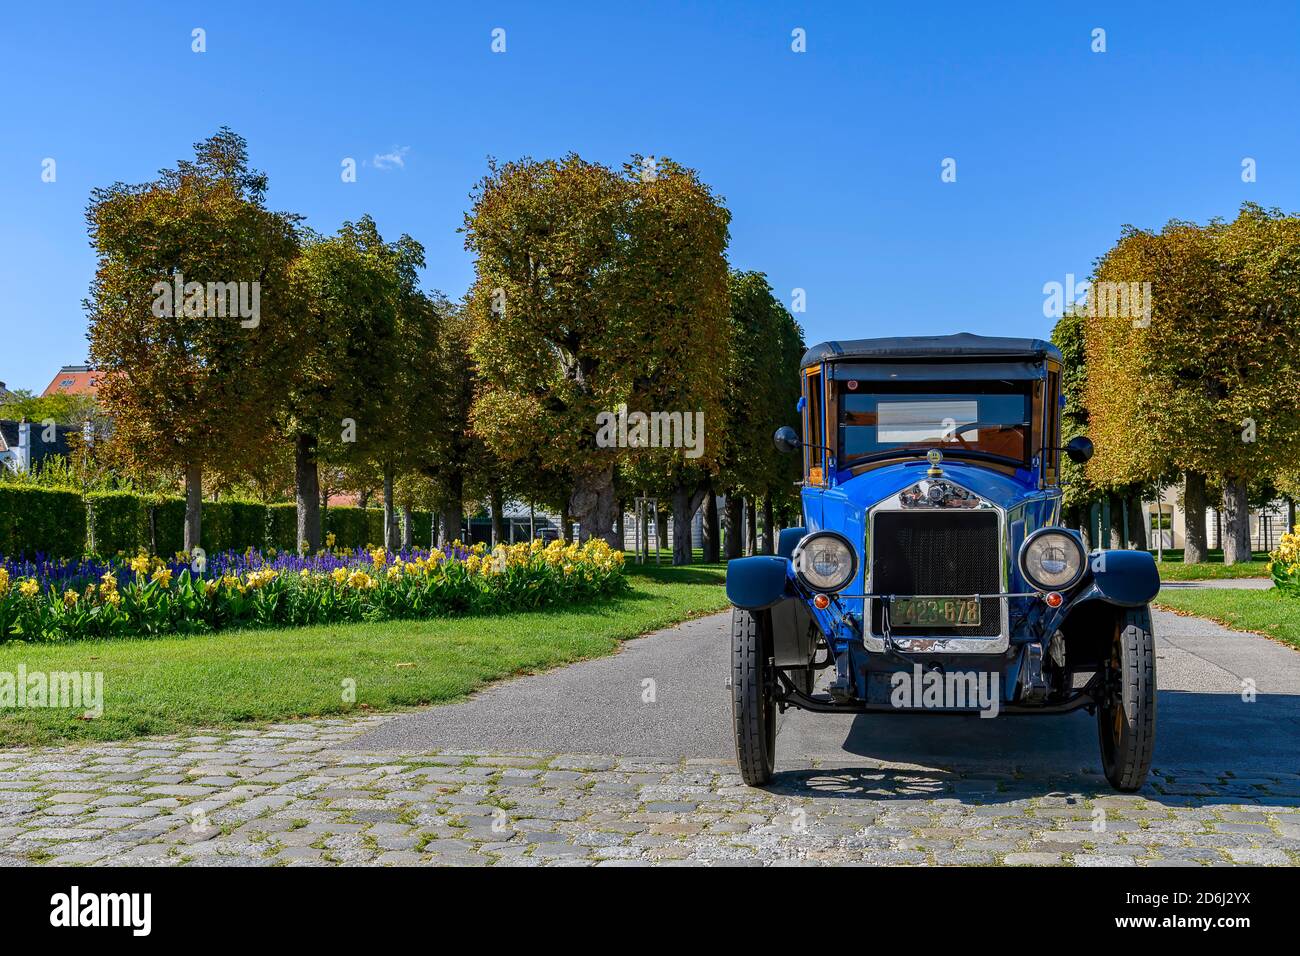 Oldtimer Dort Touring, year of construction 1922, blue, Austria Stock Photo